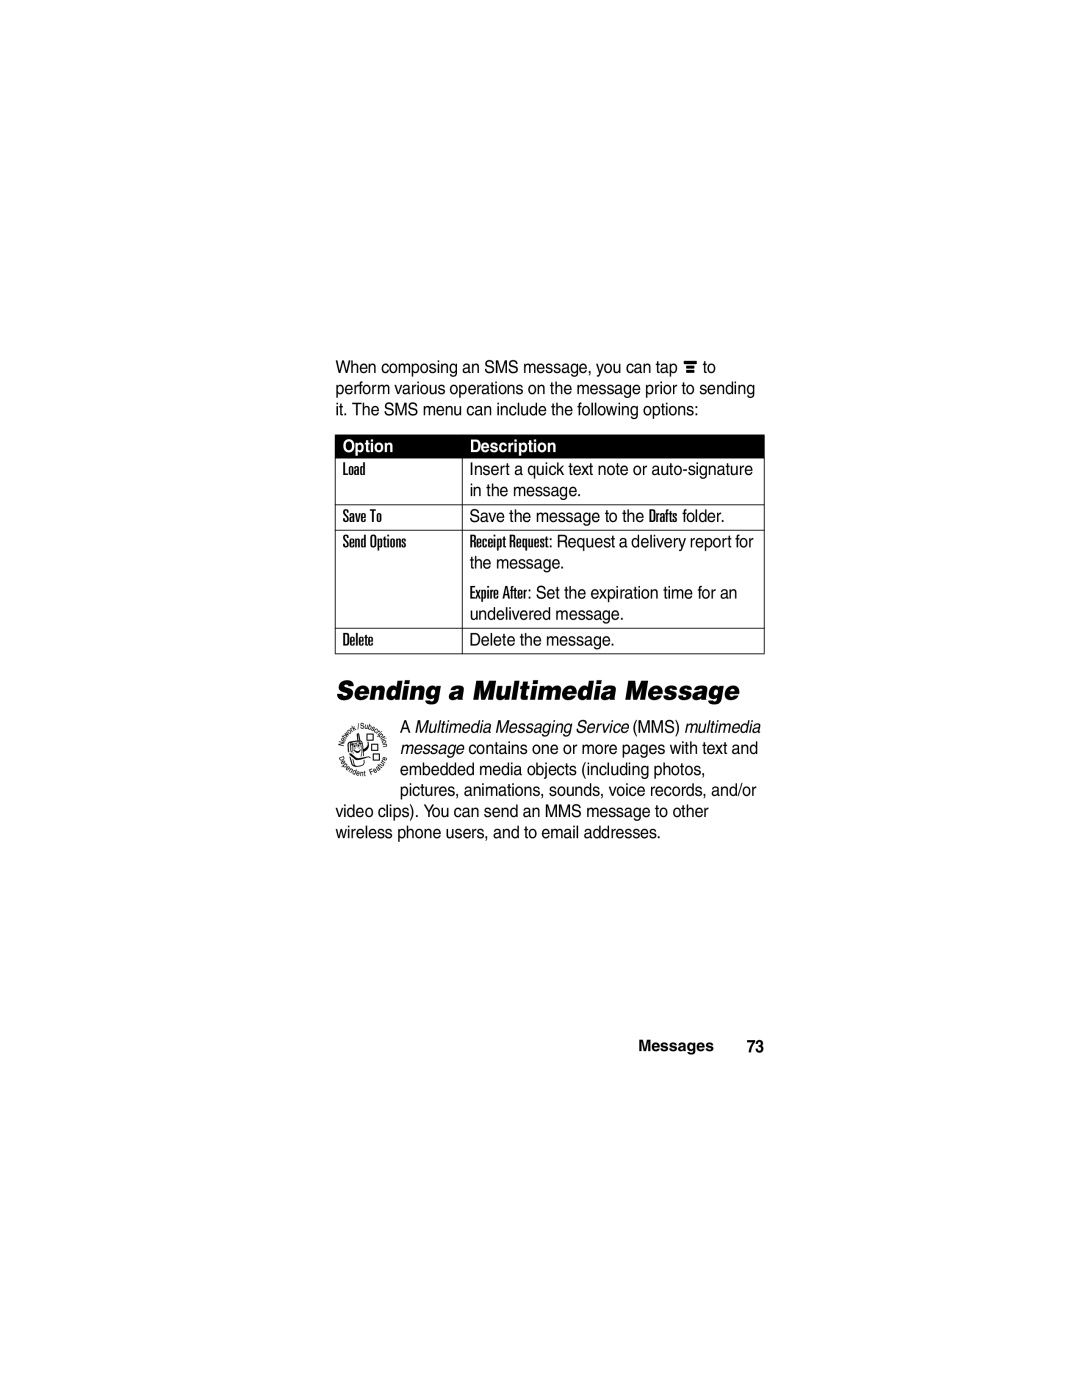 Motorola A780 manual Sending a Multimedia Message, Load, Save To, Send Options, Delete, Description 